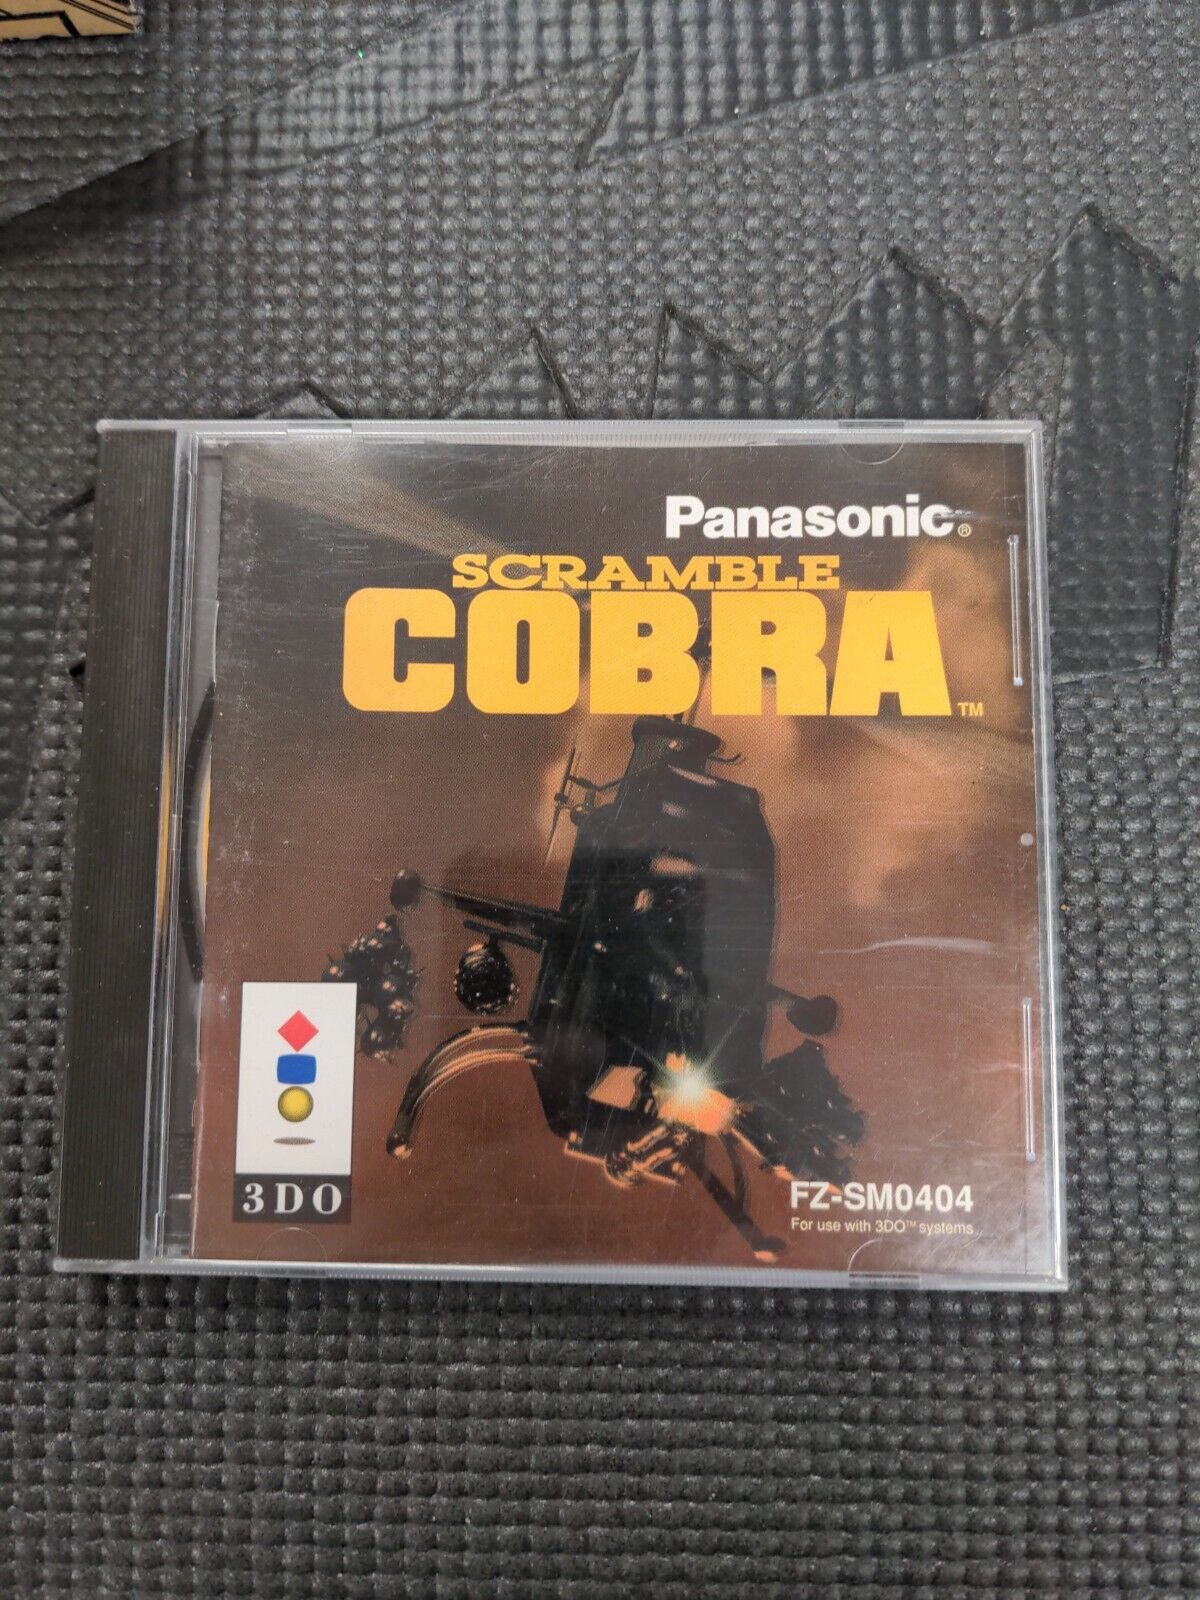 3DO Scramble Cobra with Manual